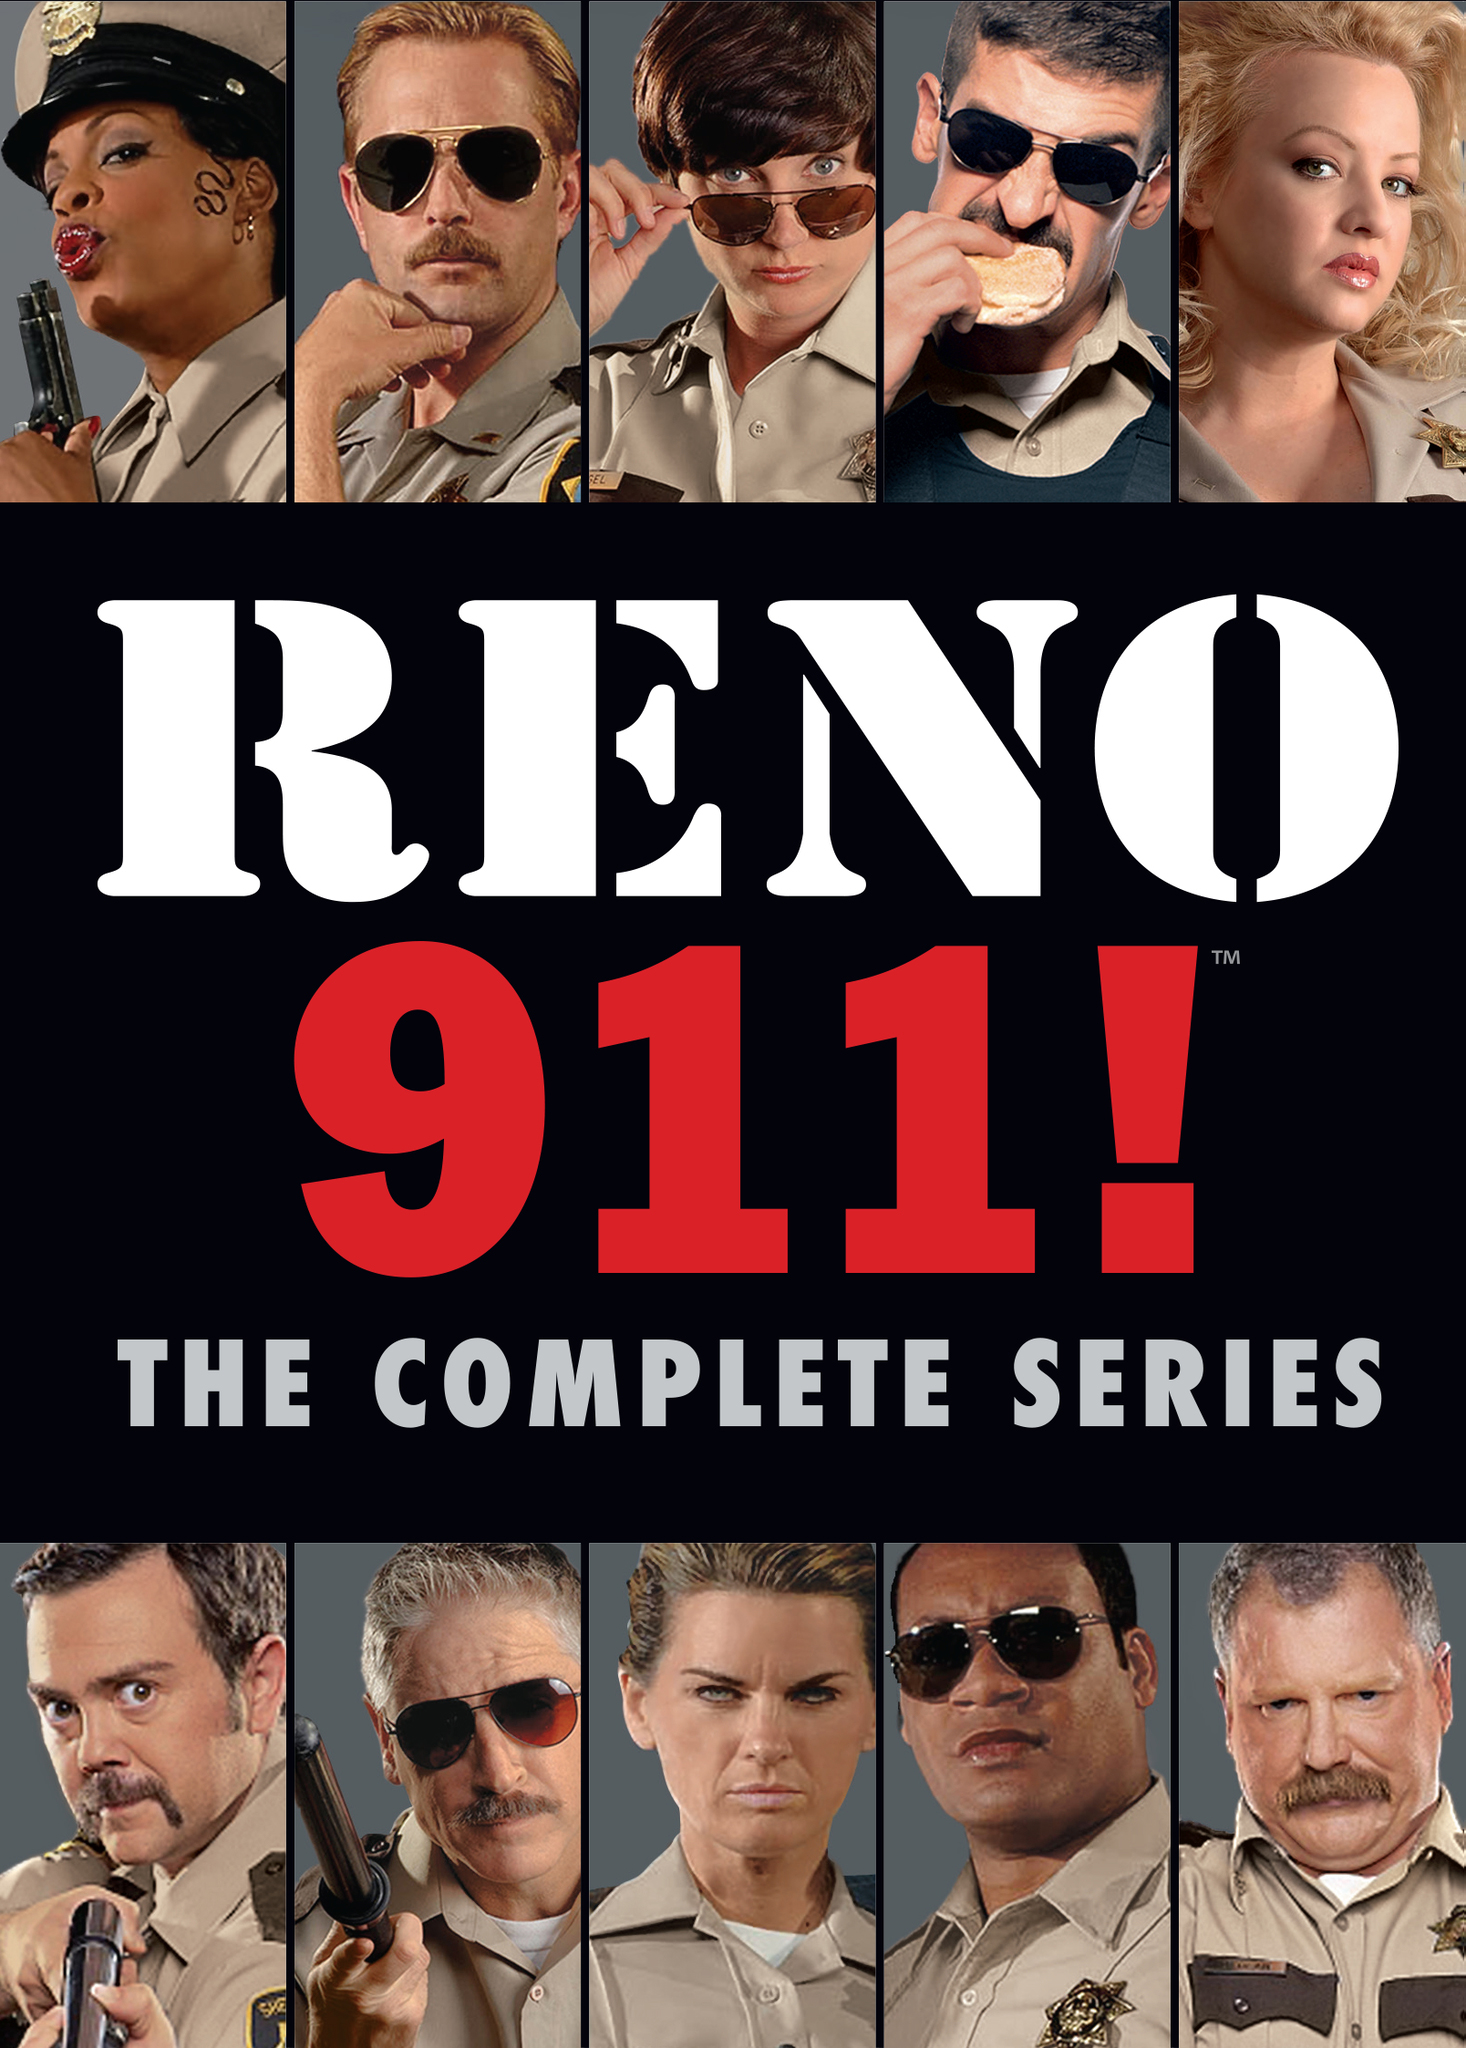 Watch Reno 911! Season 1